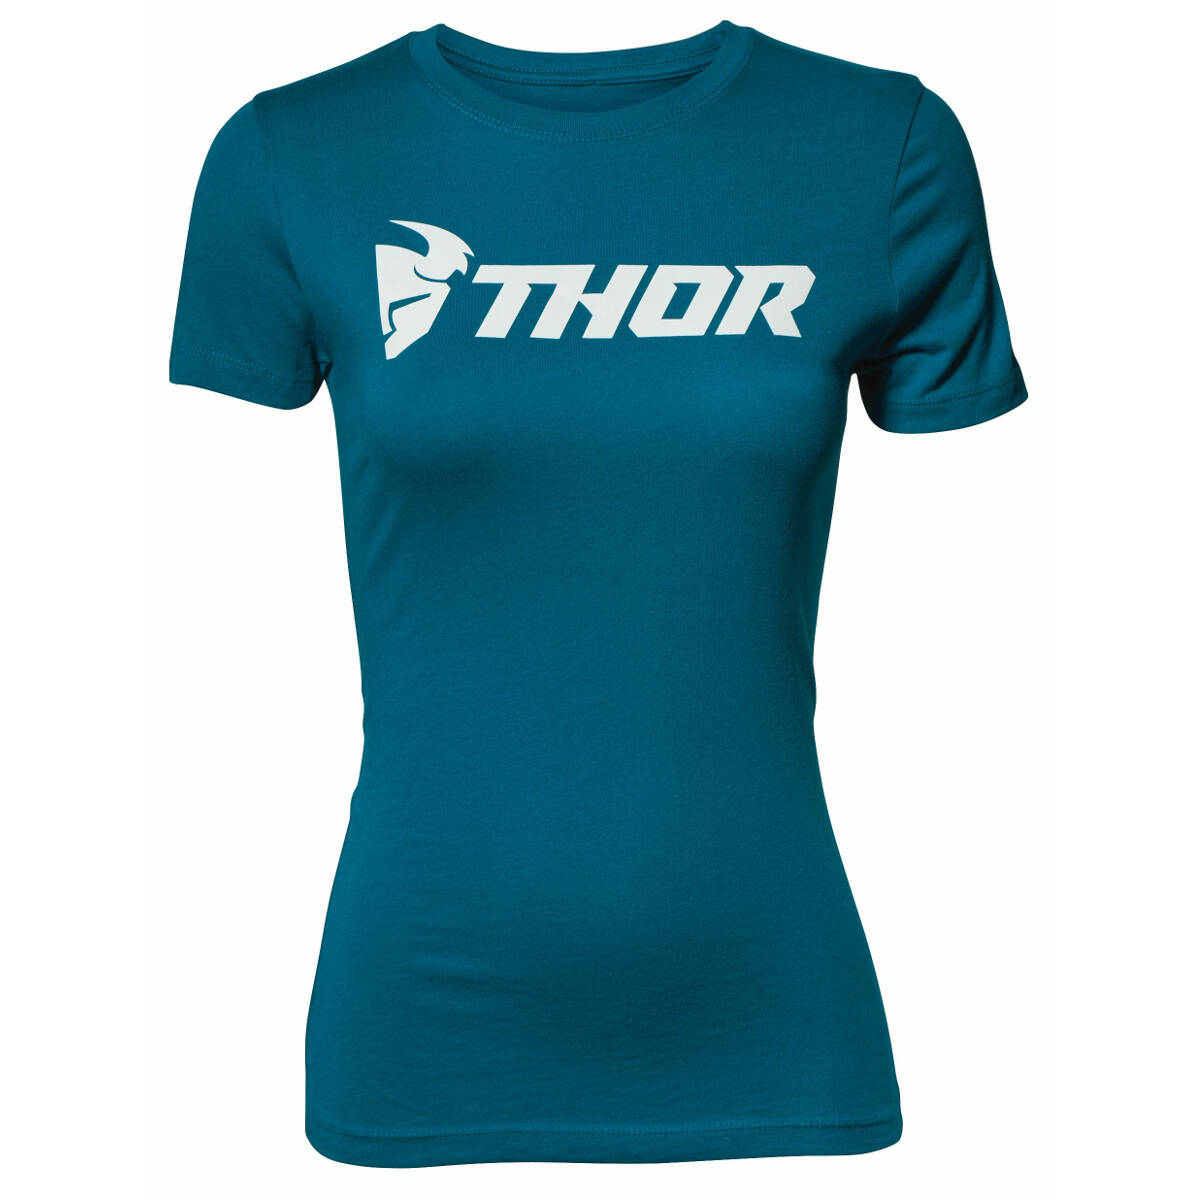 Thor Femme T-Shirt Loud Teal